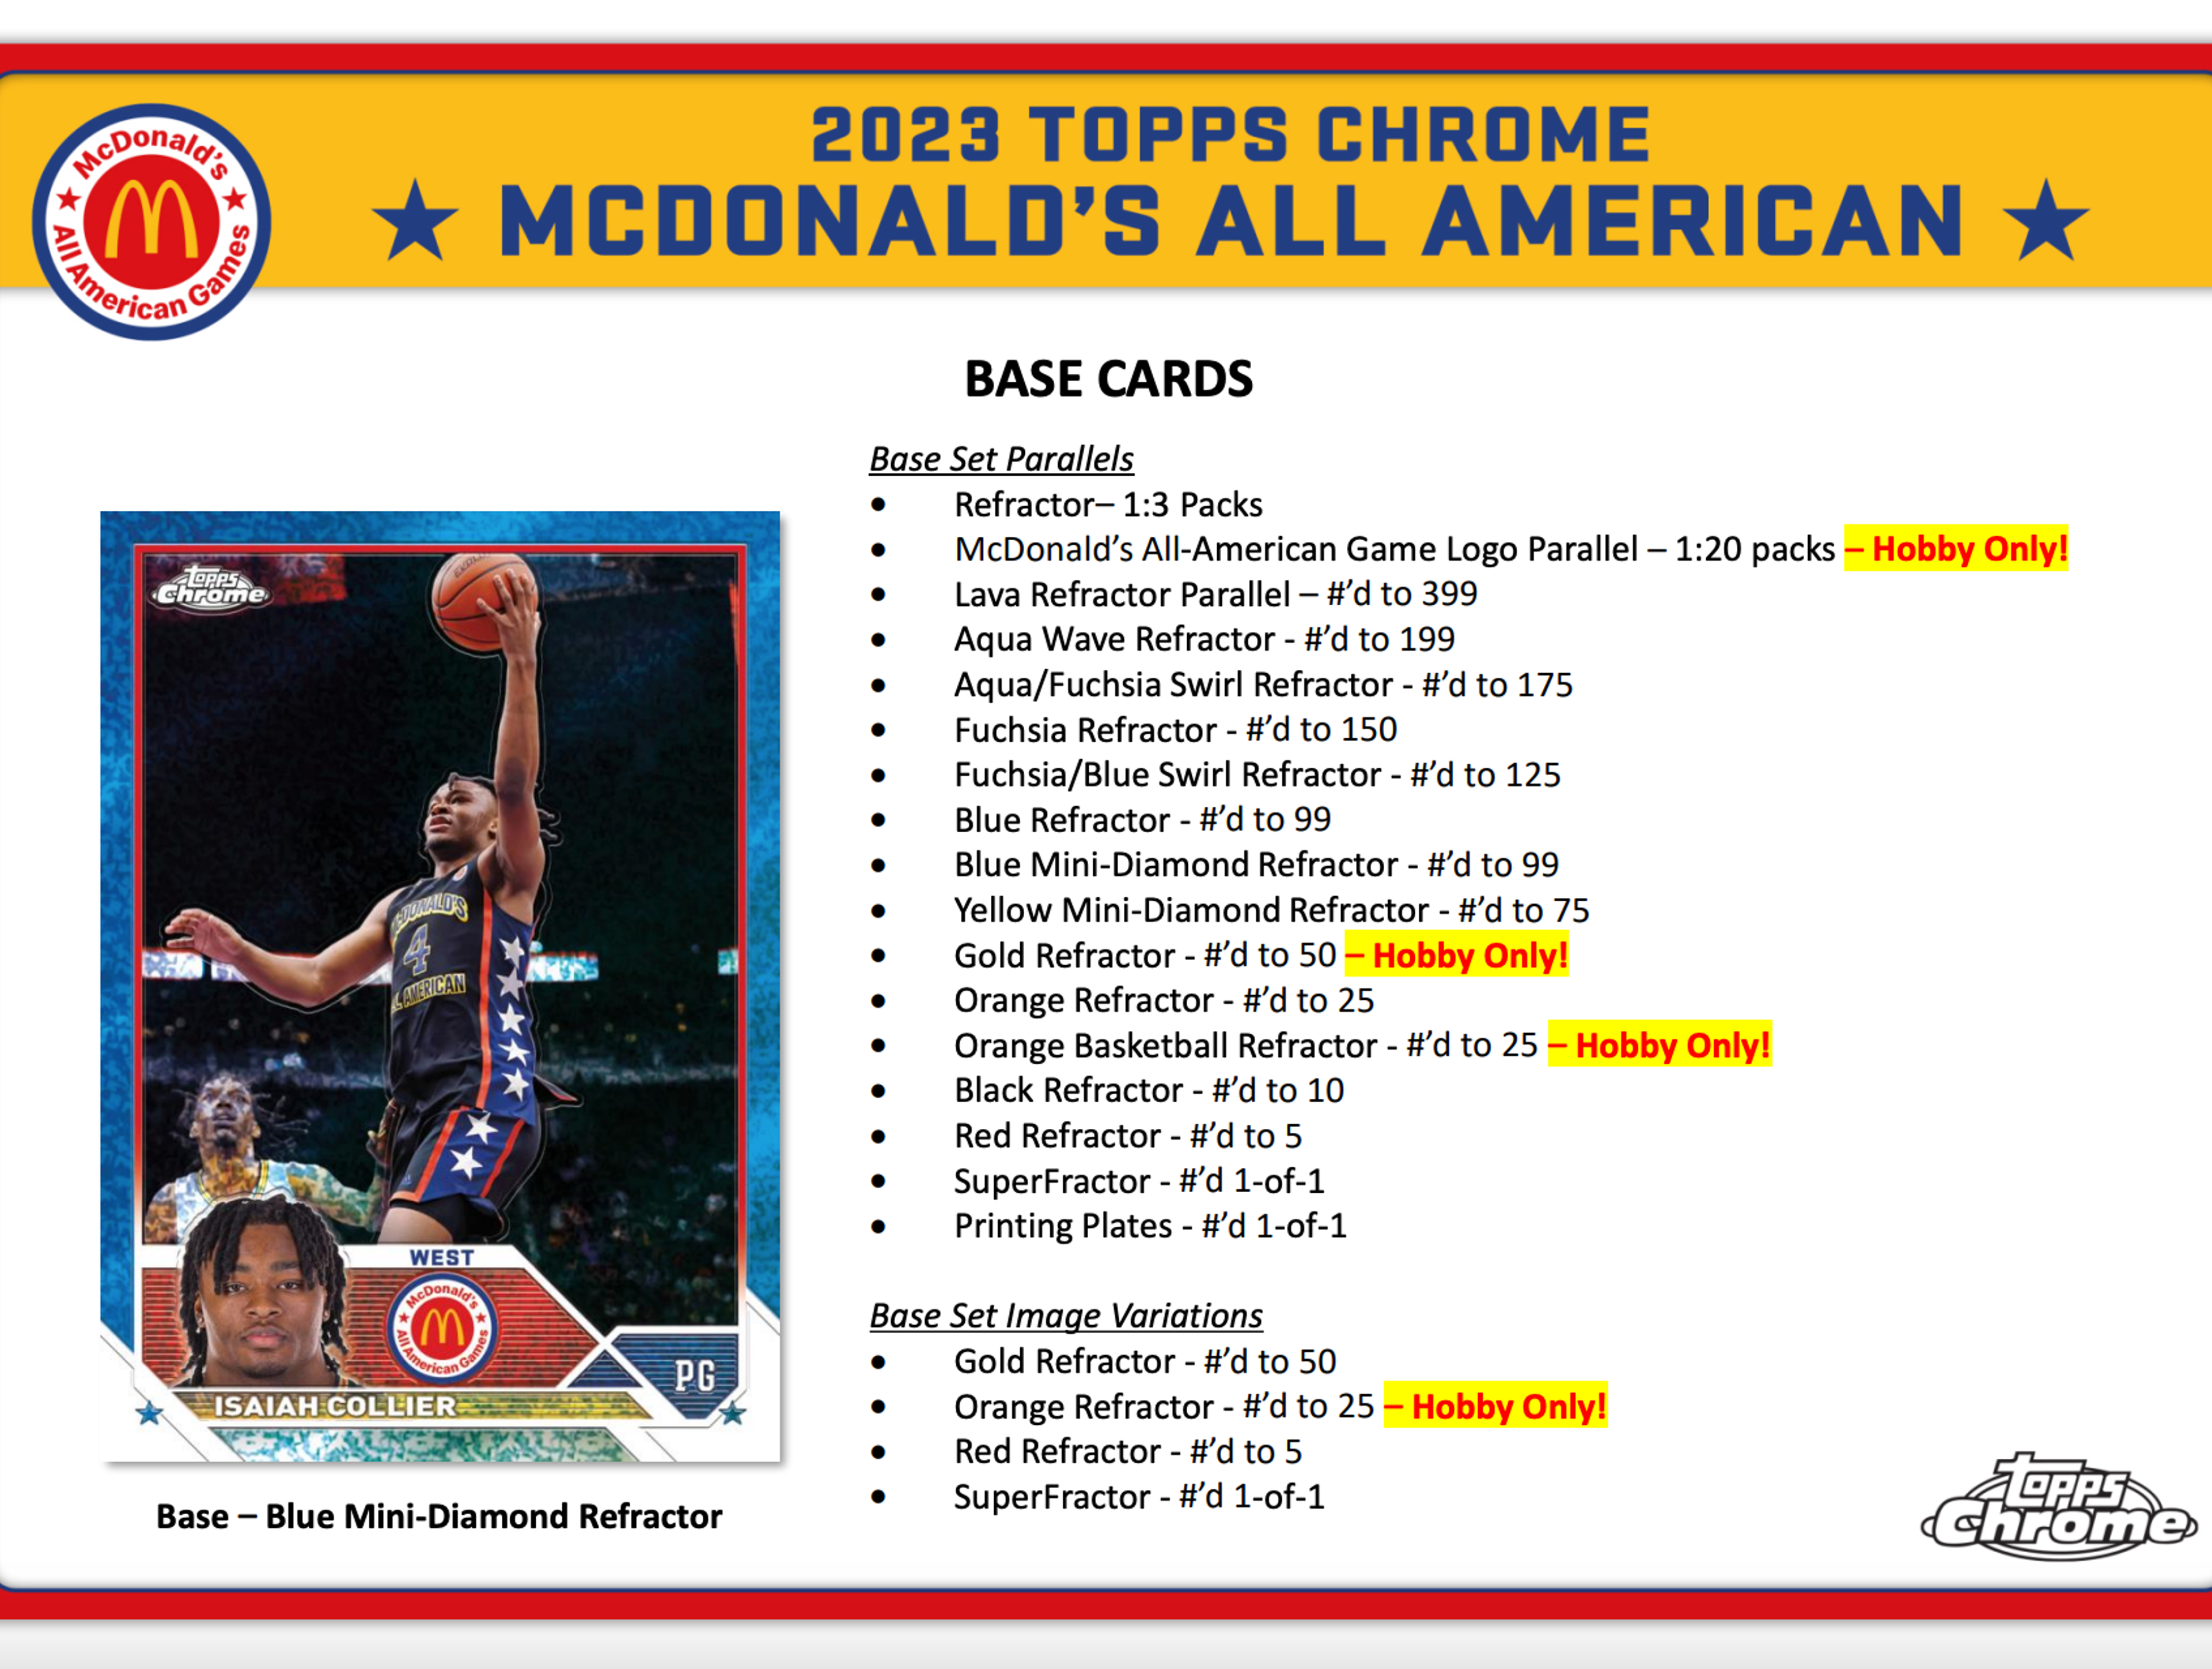 Alternate View 2 of 2023 Topps Chrome McDonald's All American Basketball Hobby Box